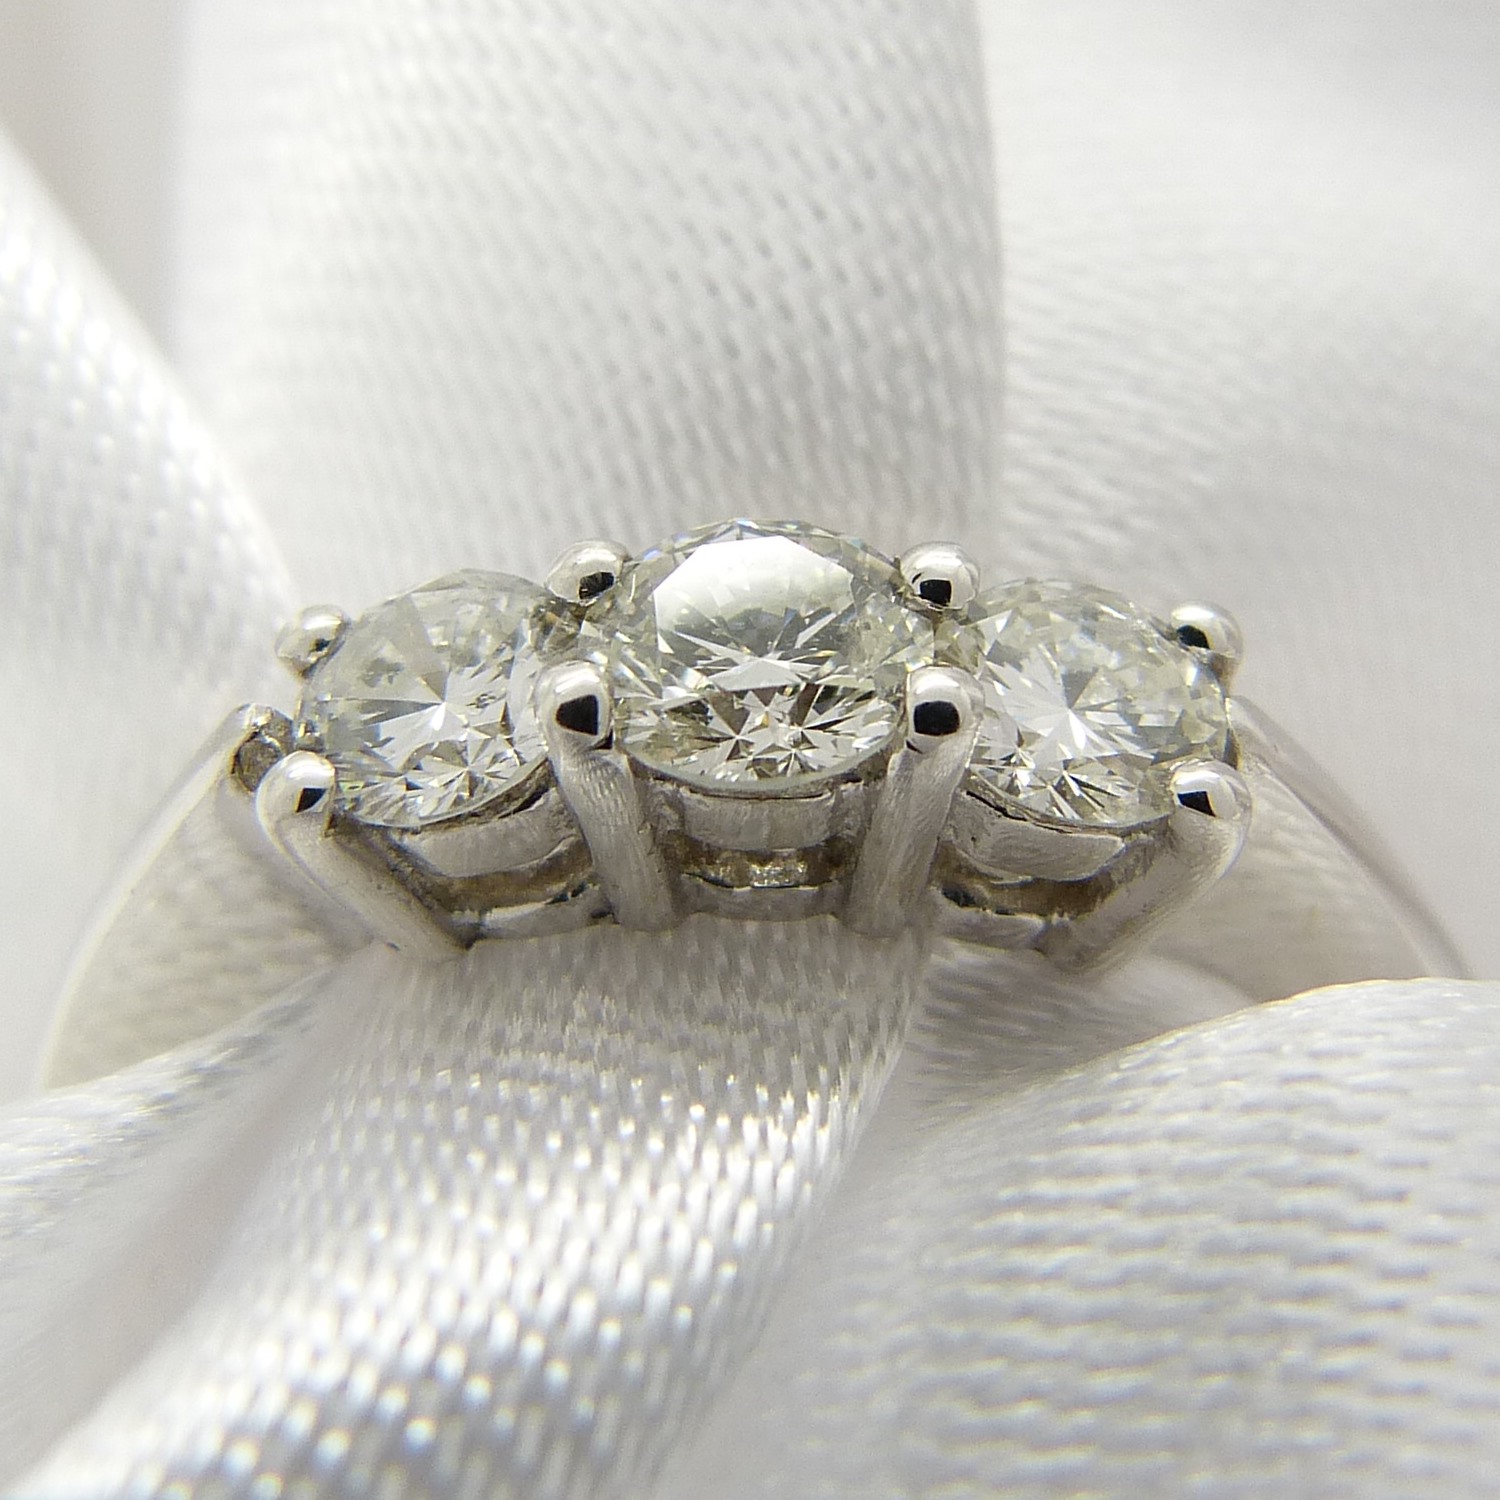 Graduated 0.51 carat diamond trilogy ring, 18ct white gold. - Image 2 of 5